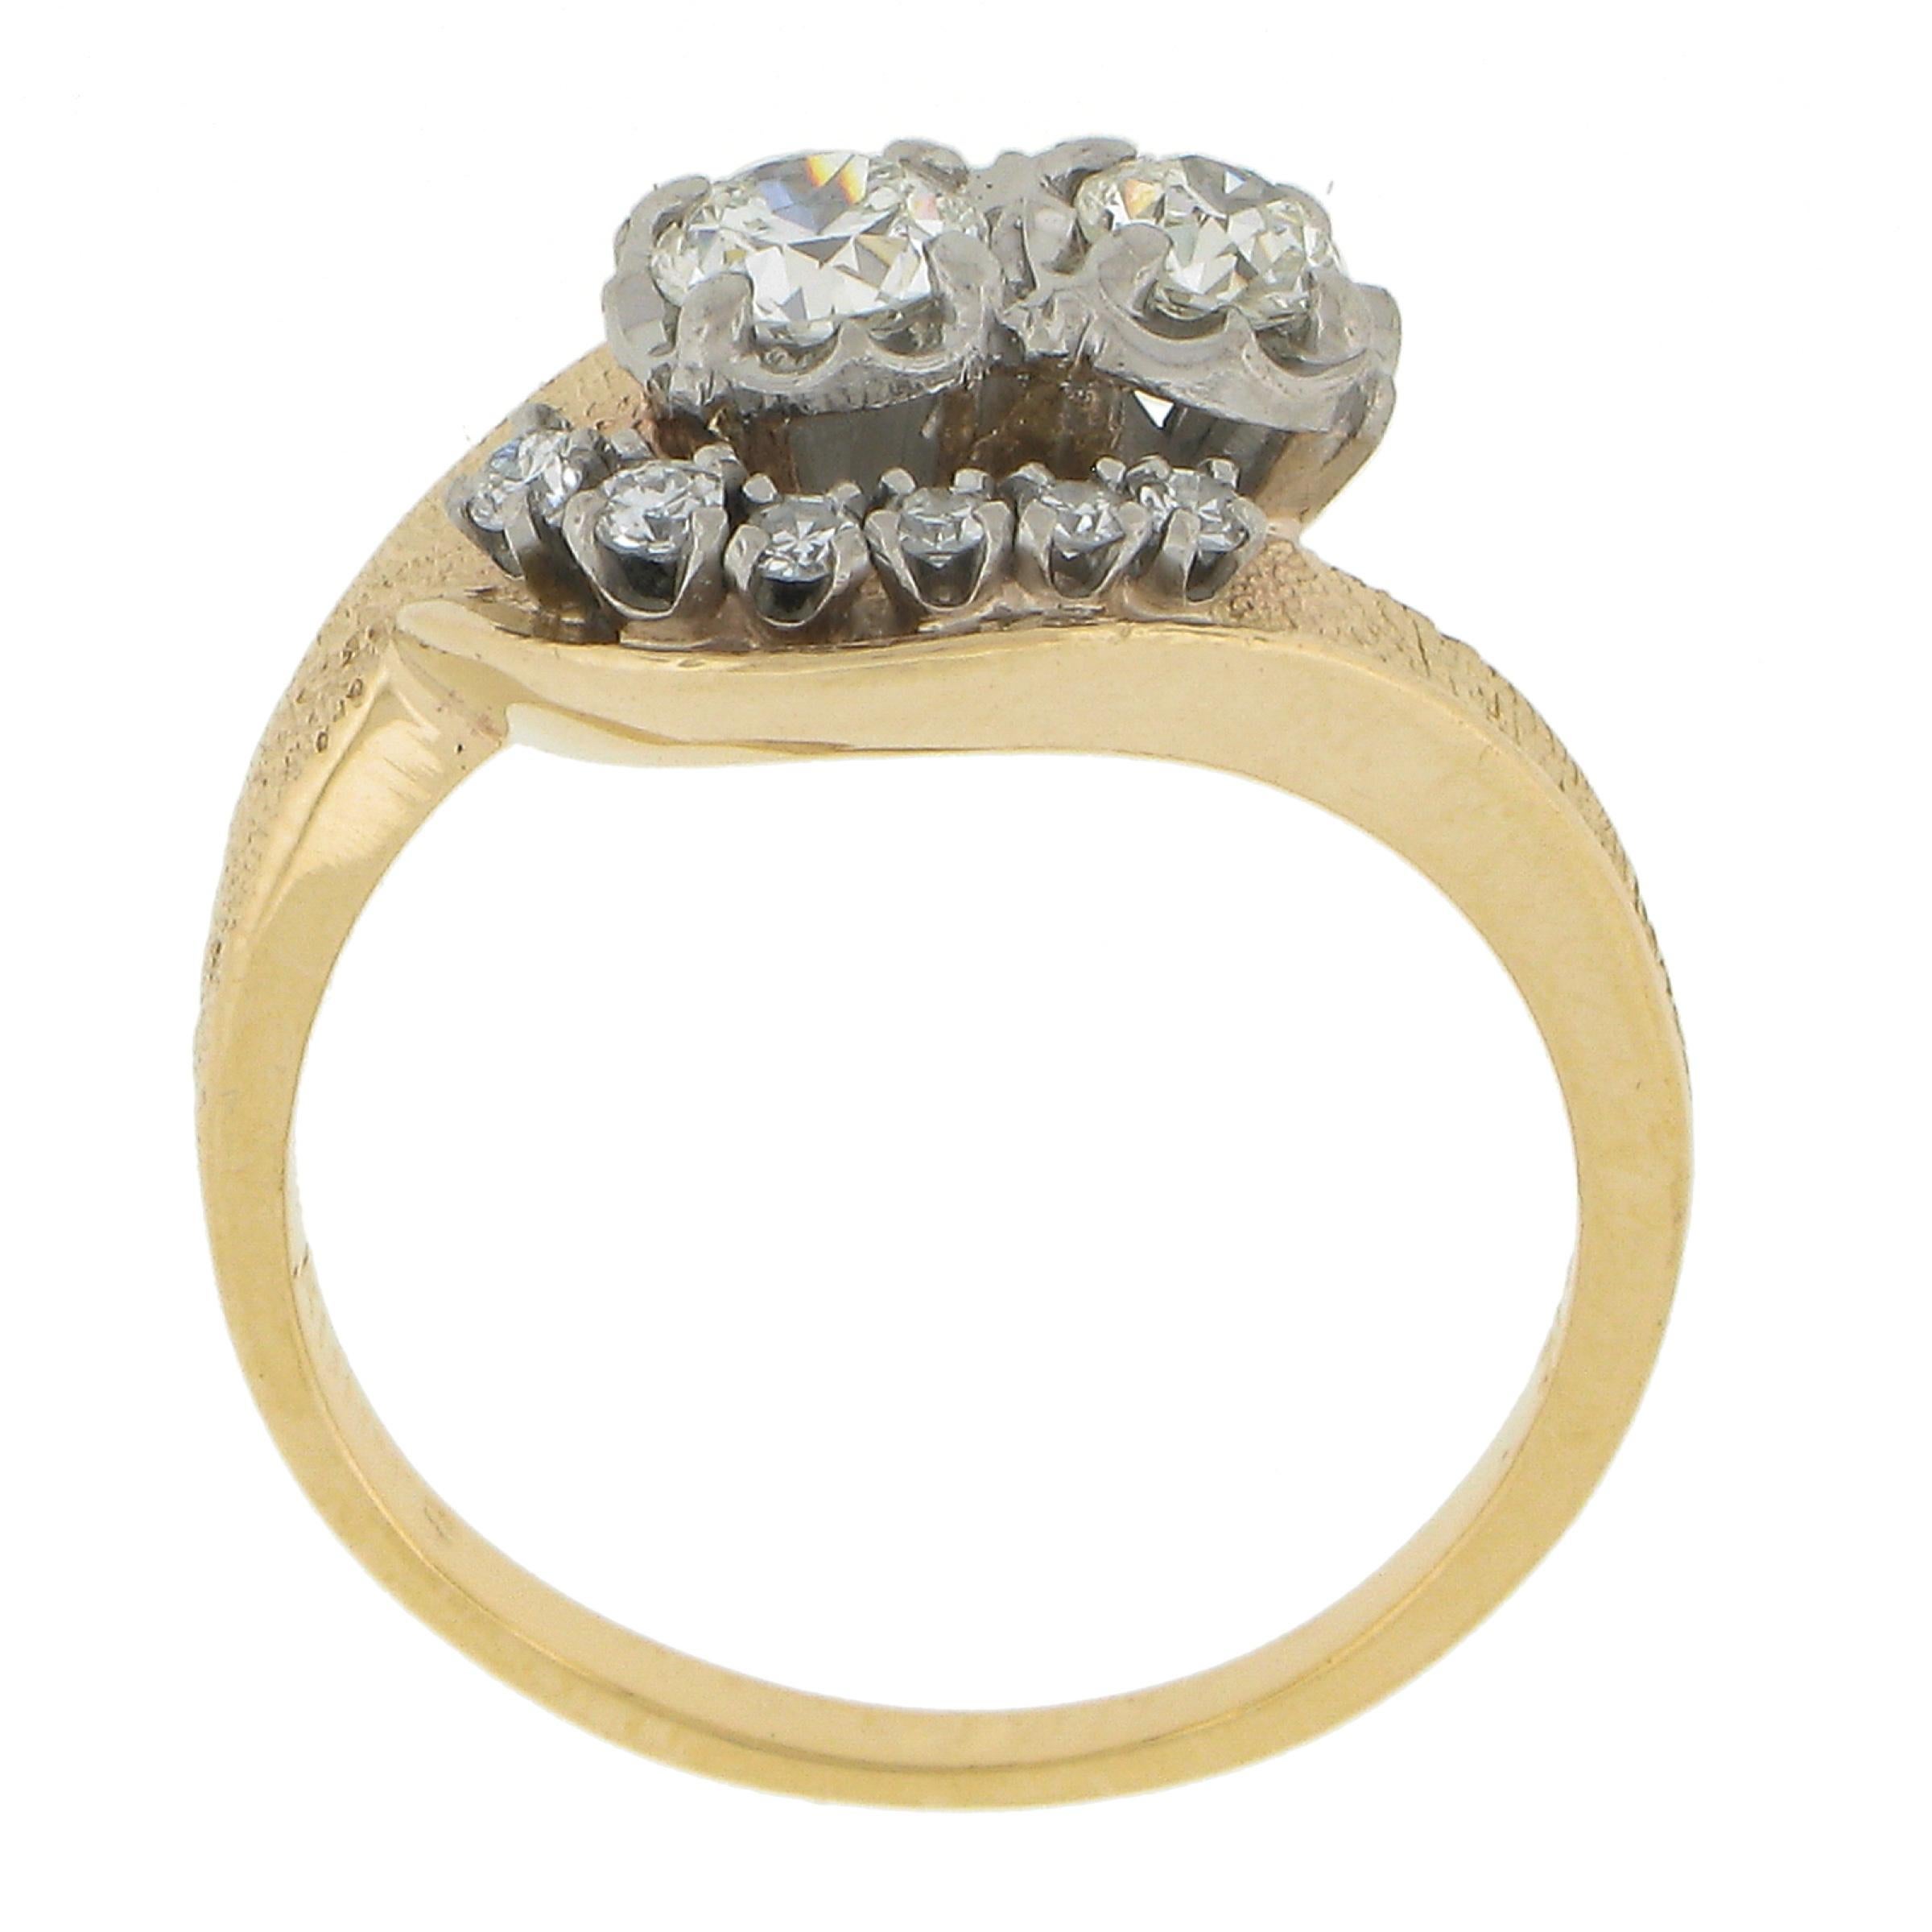 Vintage 14k TT Gold .82ct Diamond Textured & Polished Statement Cocktail Ring For Sale 3